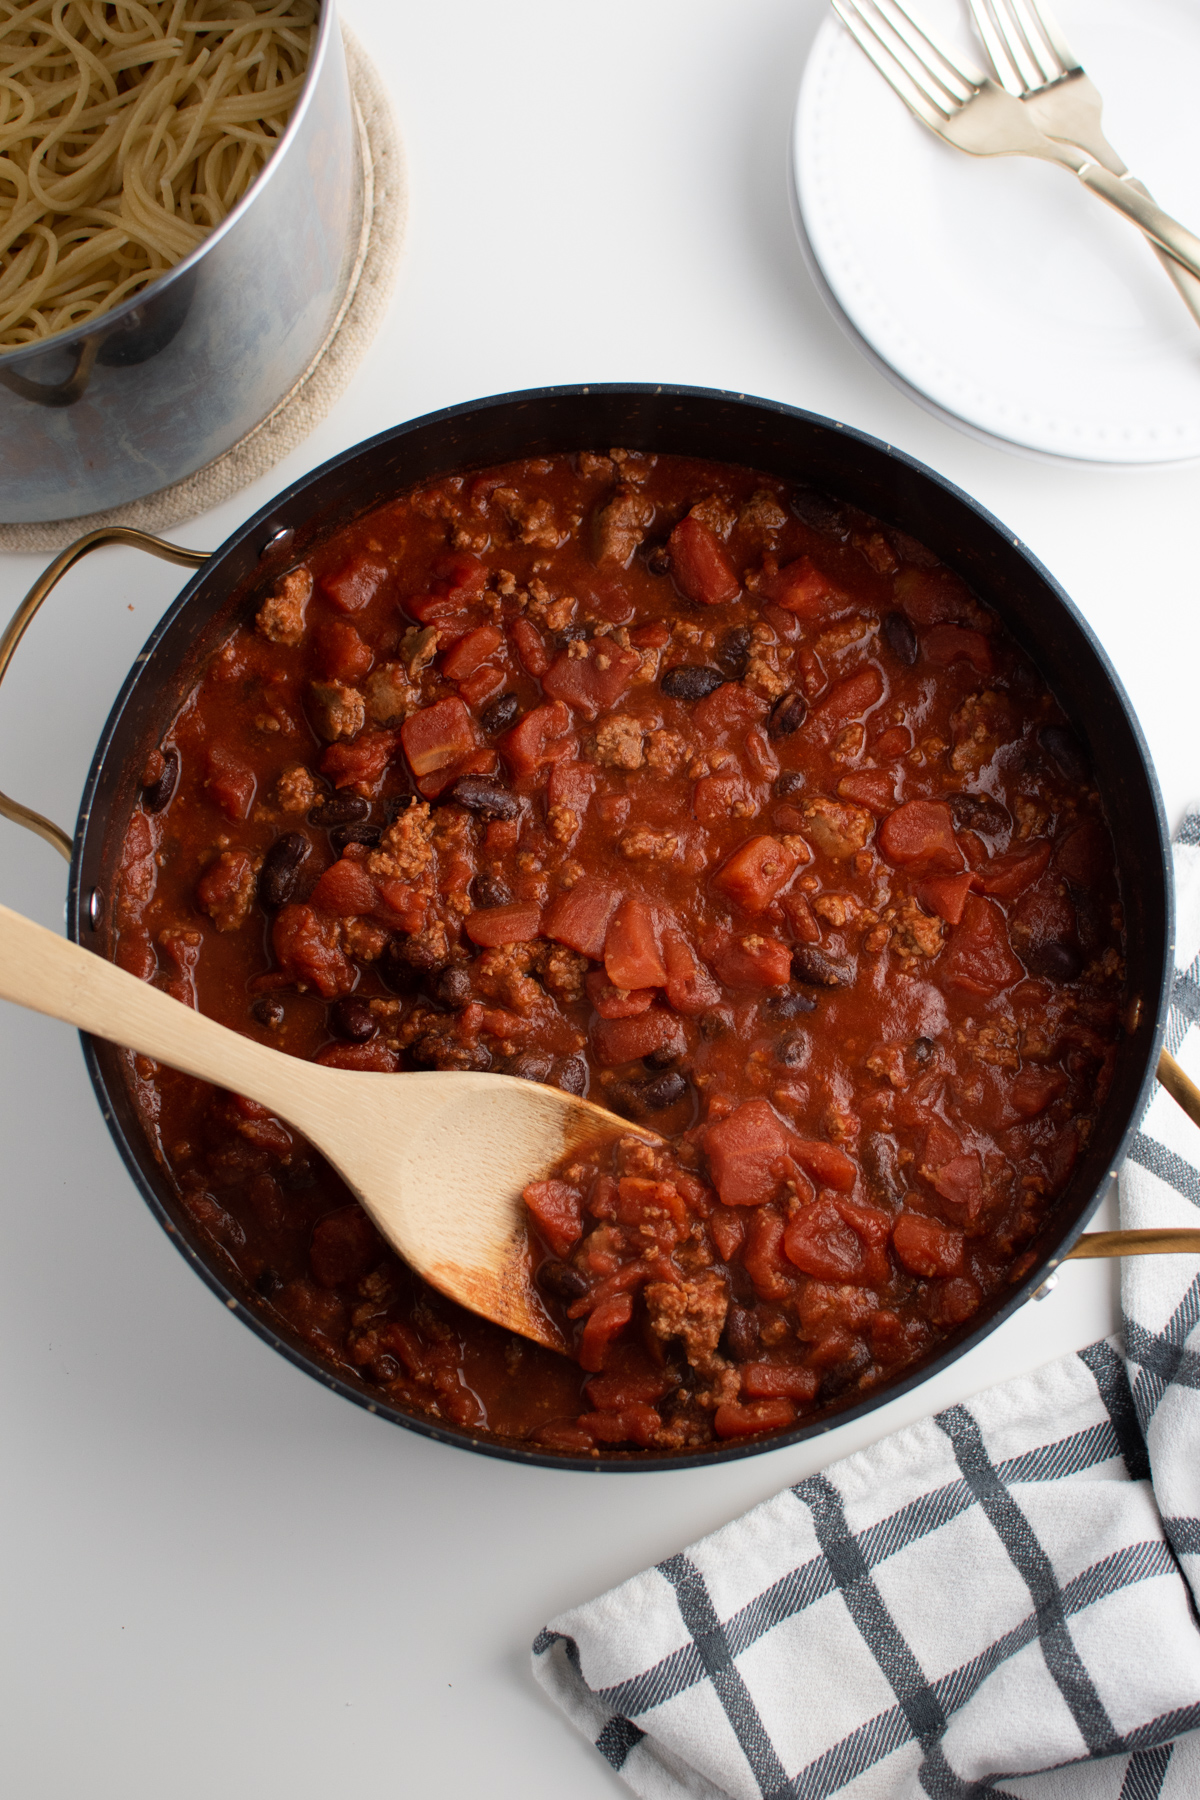 Pan of Cincinnati chili with wooden spatula next to pot of spaghetti.